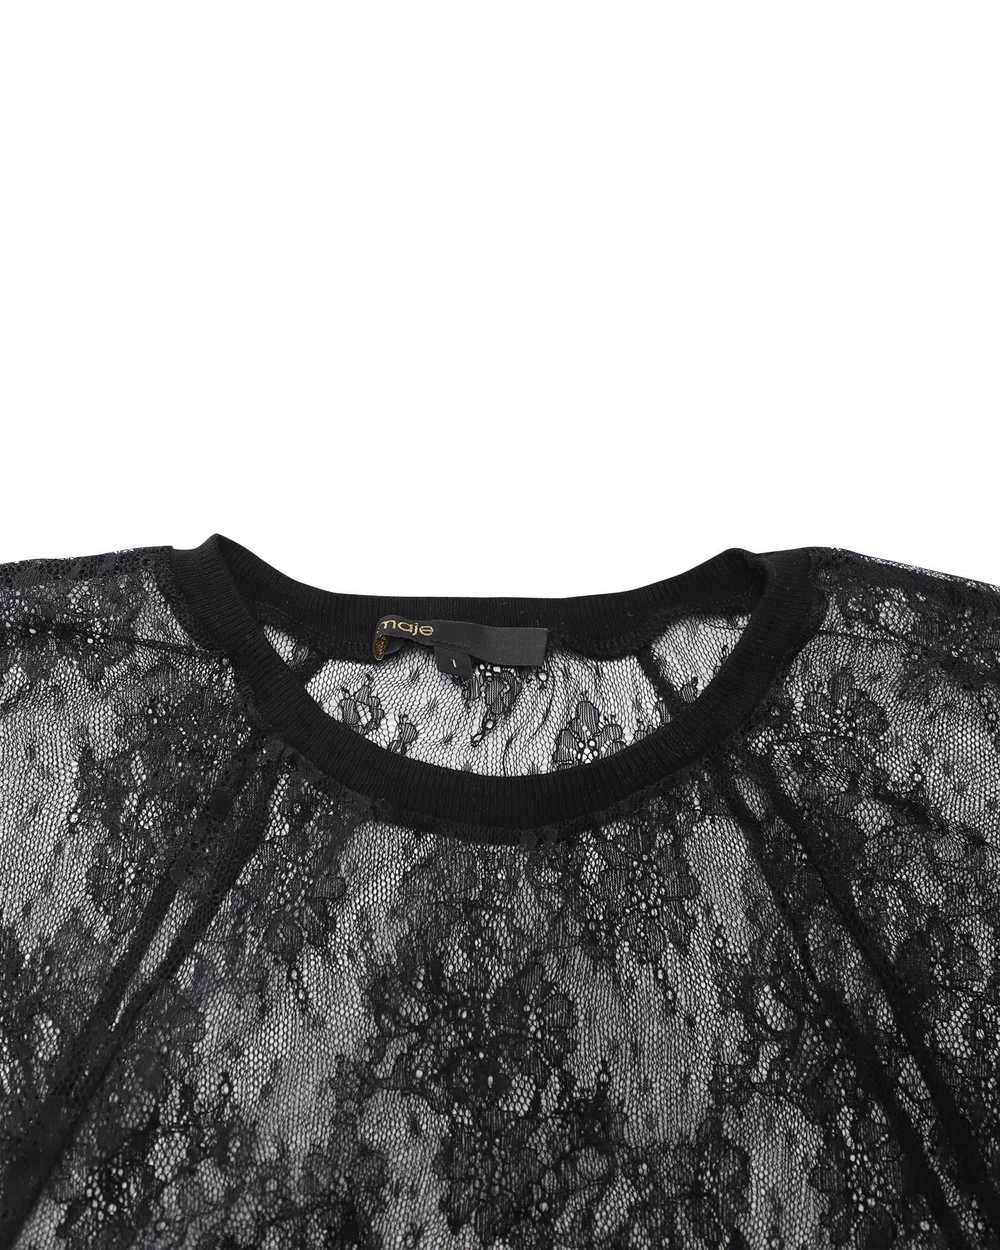 Maje Floral Lace Scoop Neck Blouse in Black Nylon - image 6